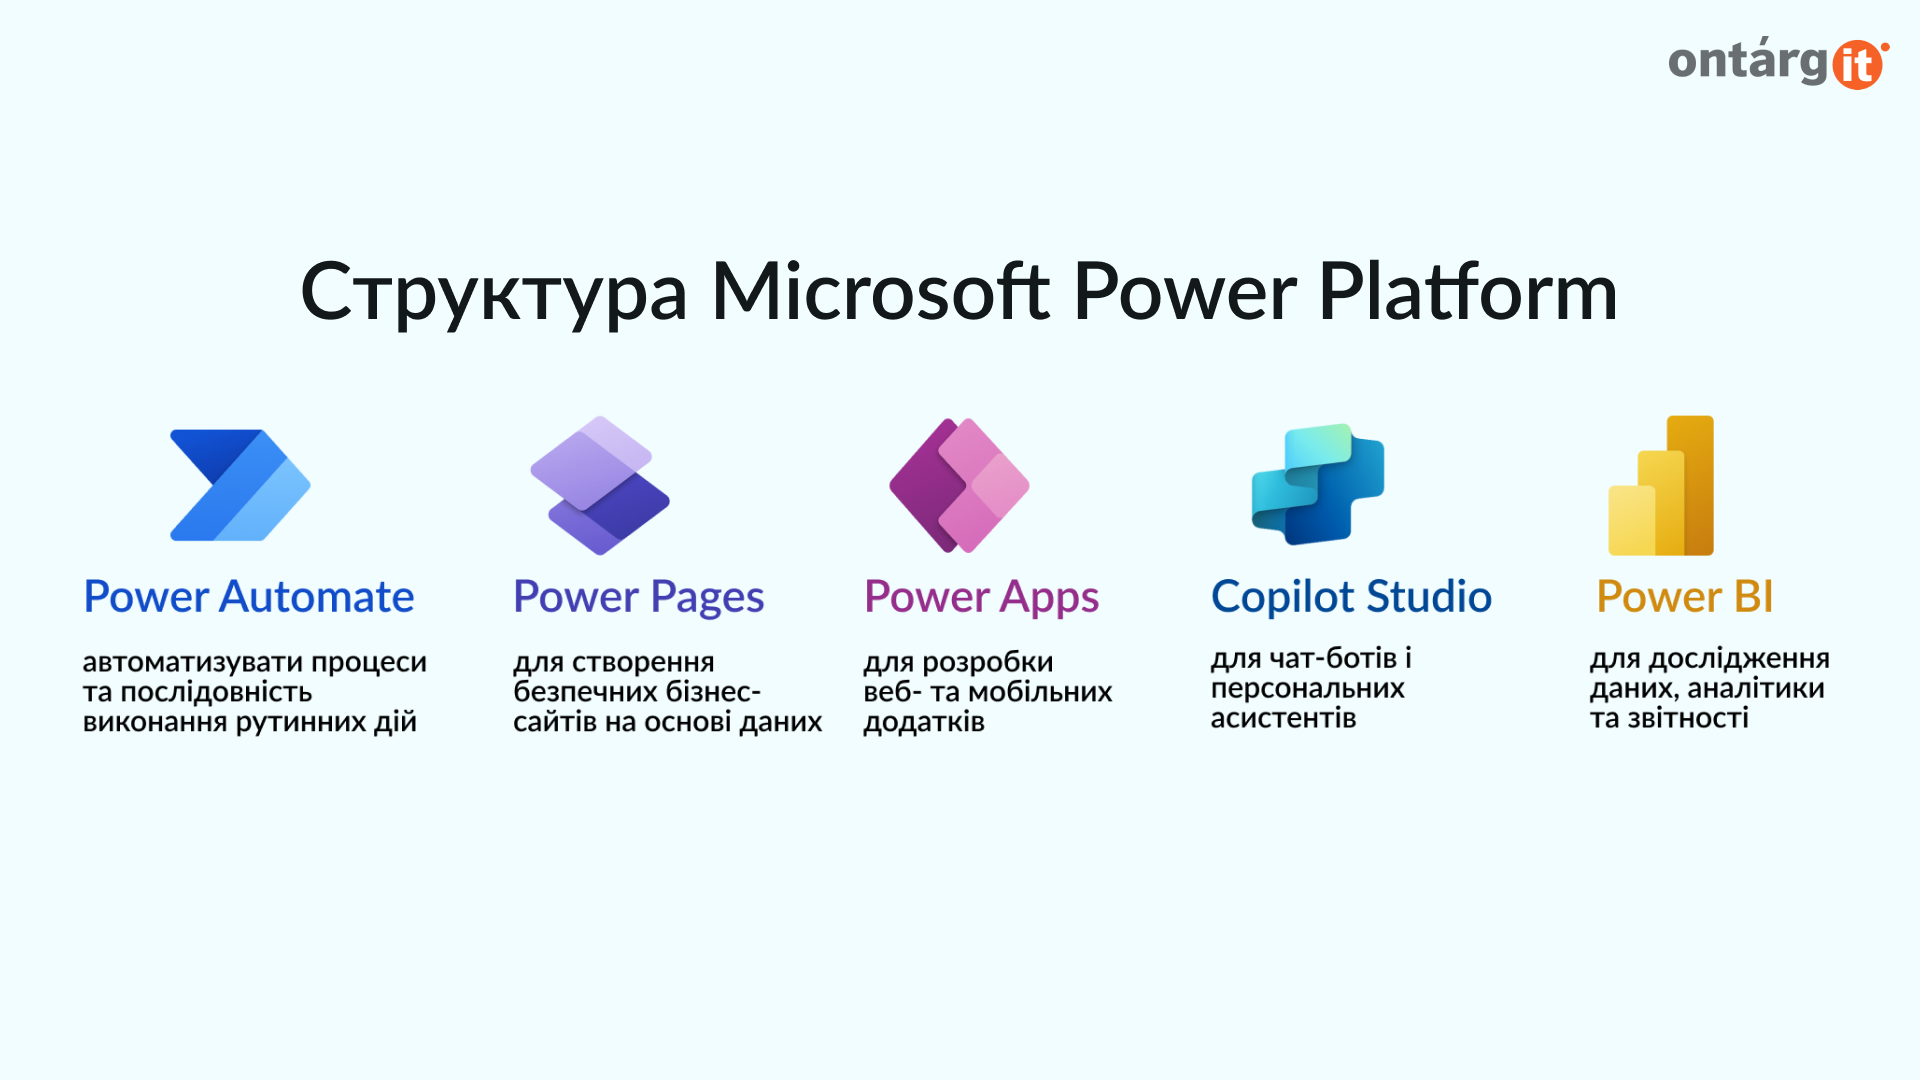 Cтруктура Microsoft Power Platform